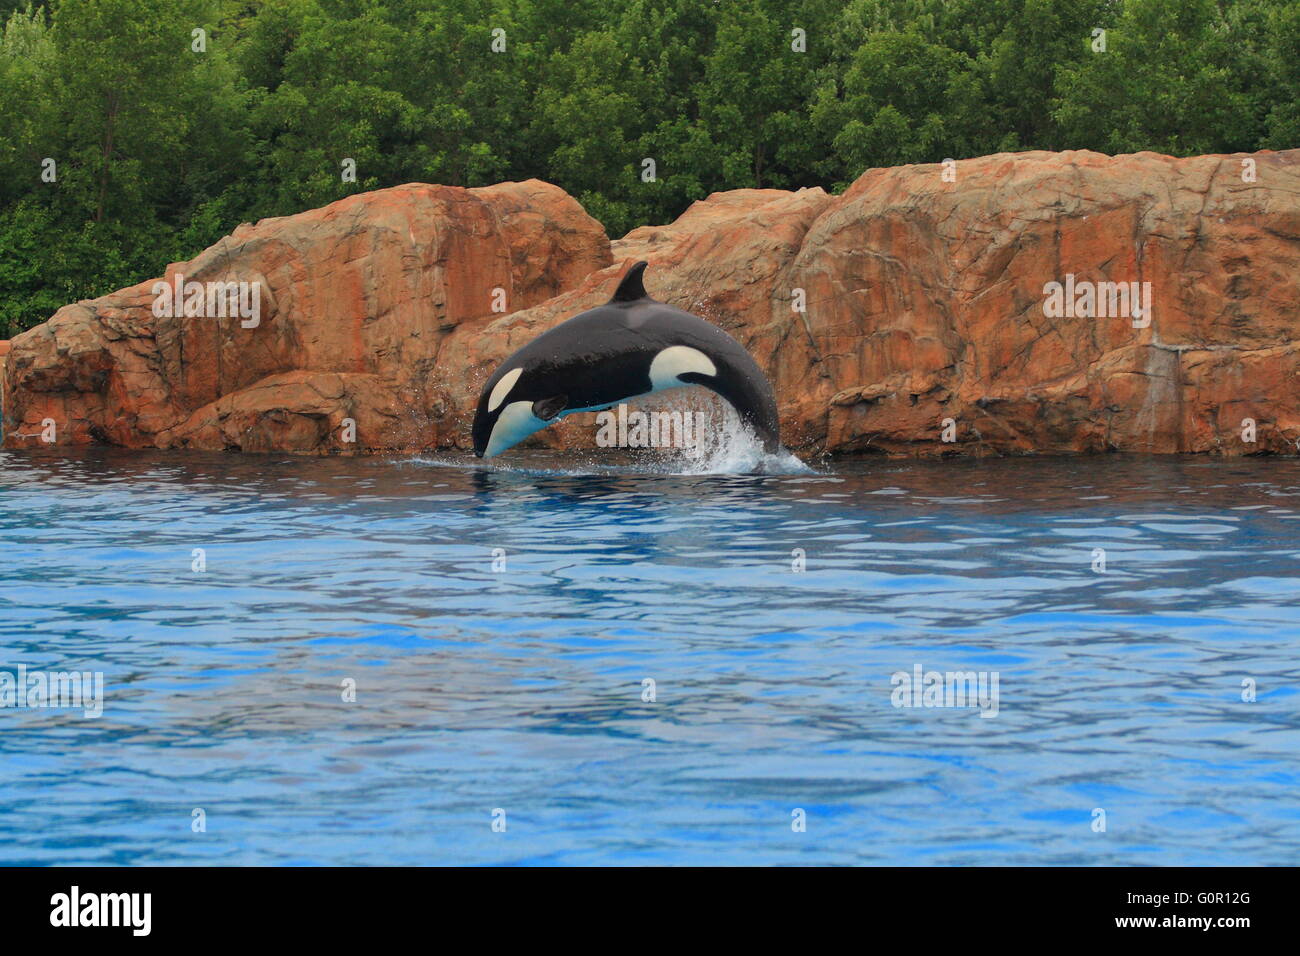 Tumbler: Jumping Orca